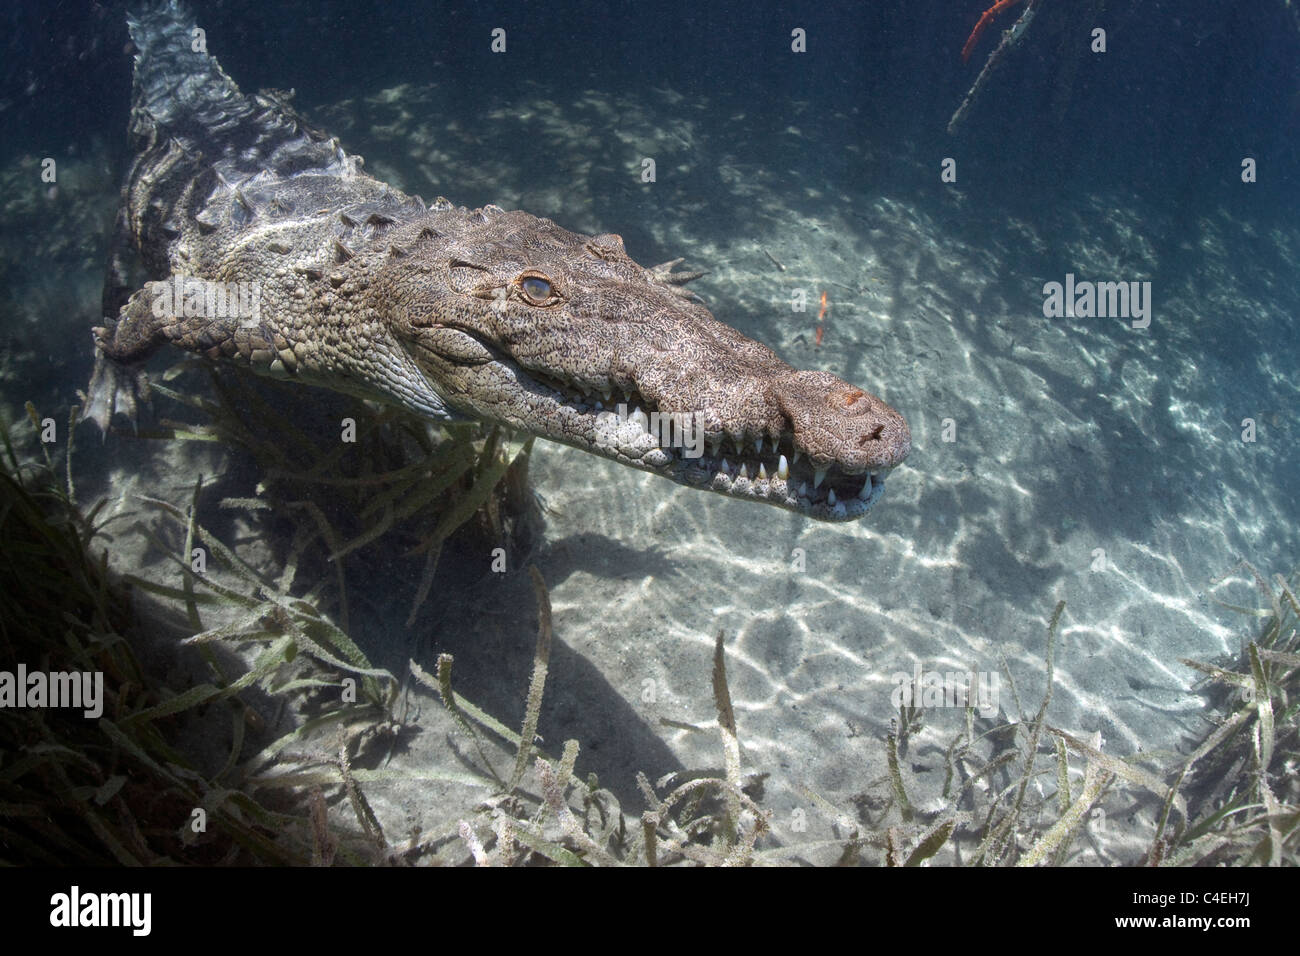 A Cuban Crocodile underwater in a mangrove forest in Cuba. Stock Photo